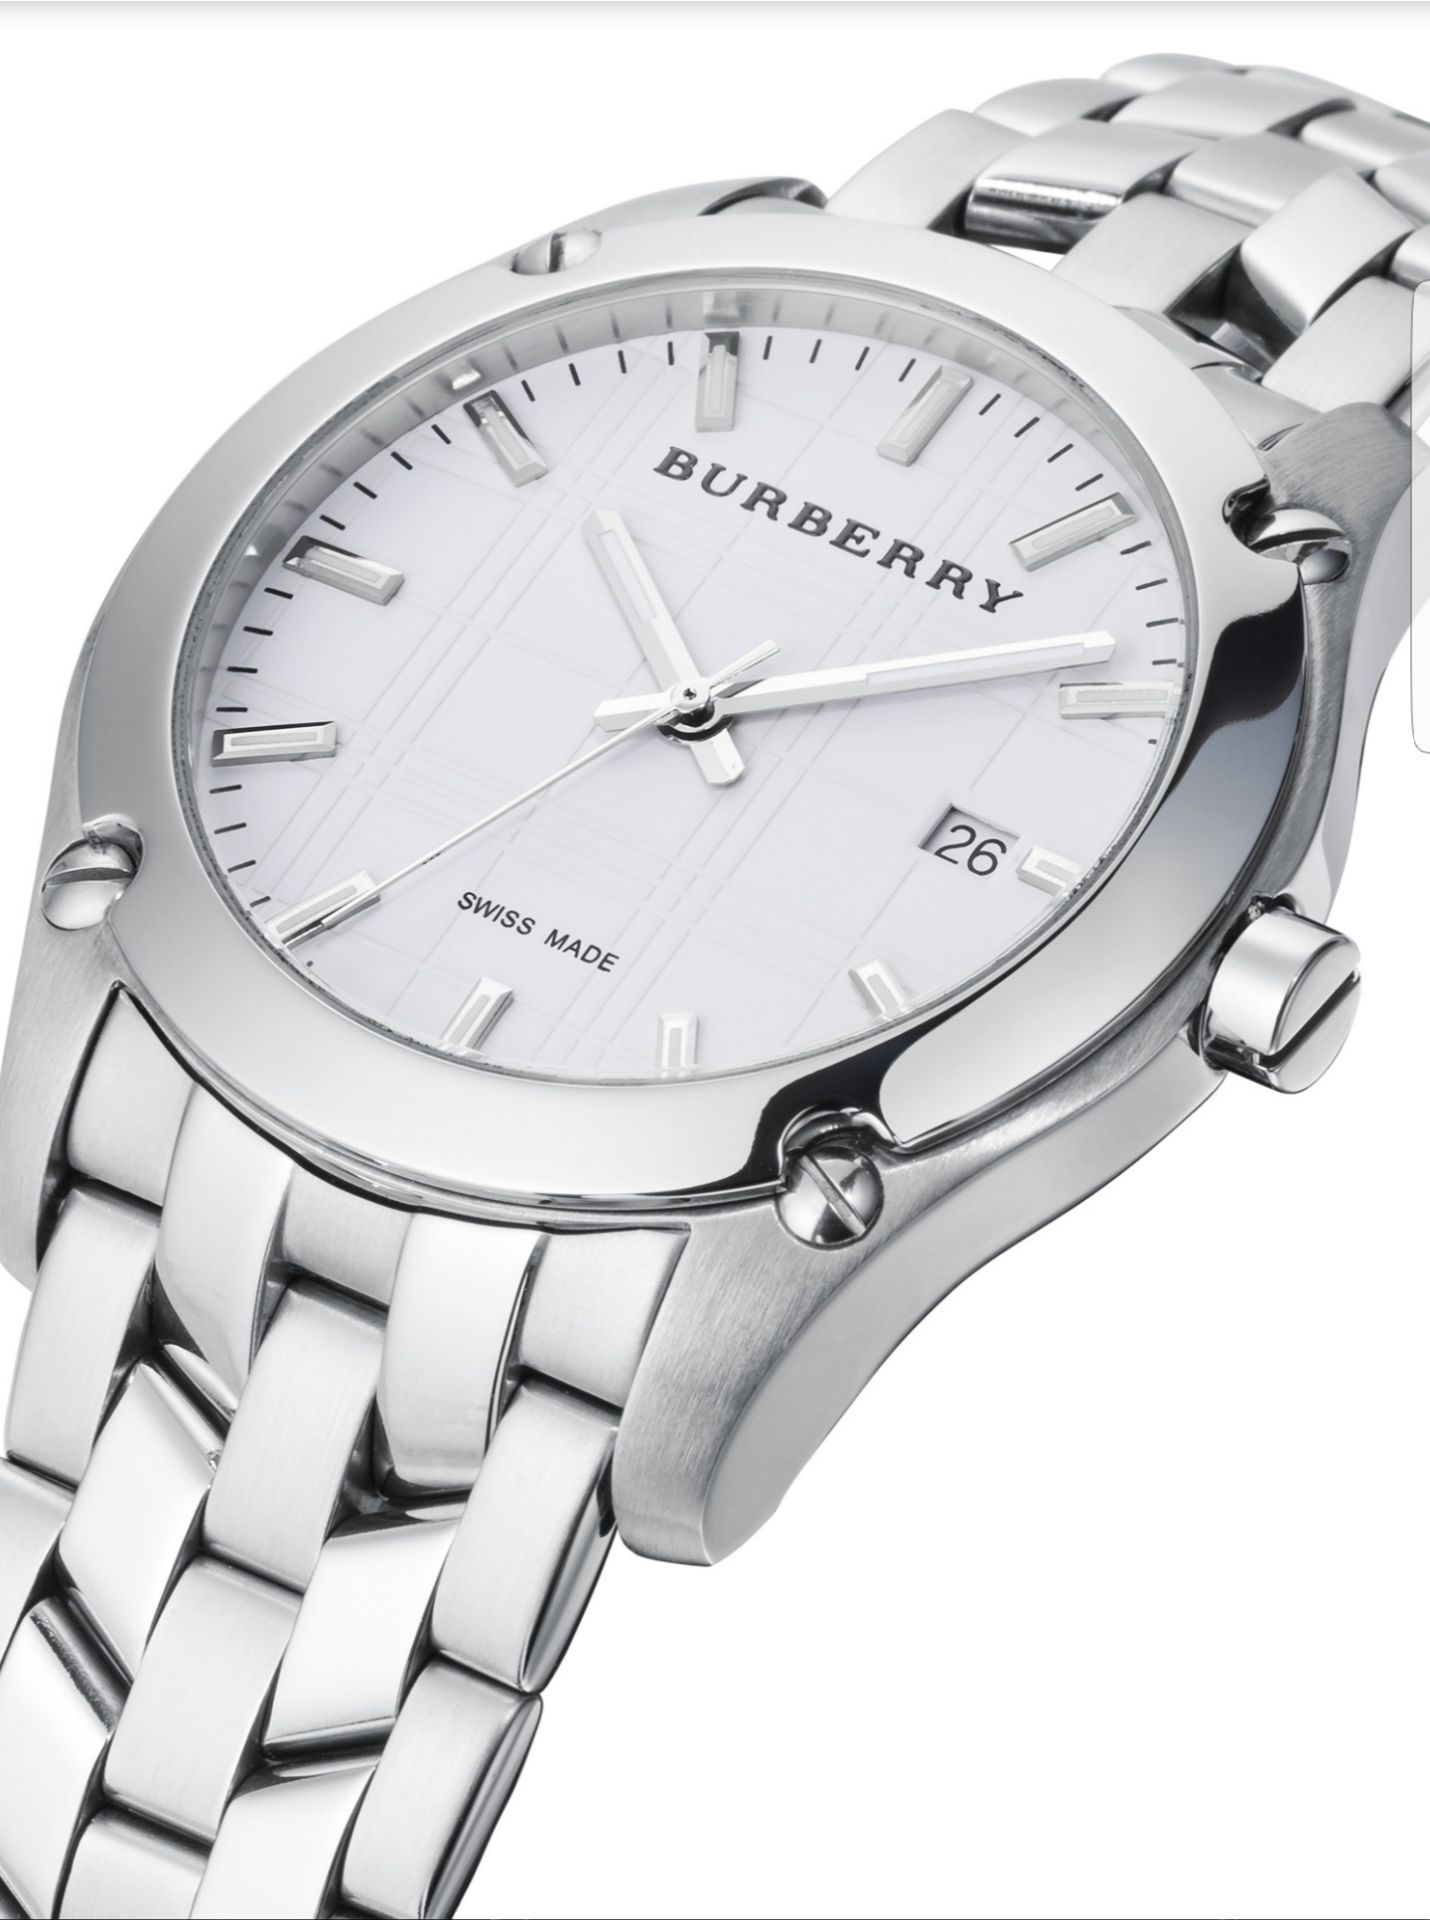 Burberry BU1852 Men's White Dial Stainless Steel Bracelet Wrist Watch - Image 3 of 6